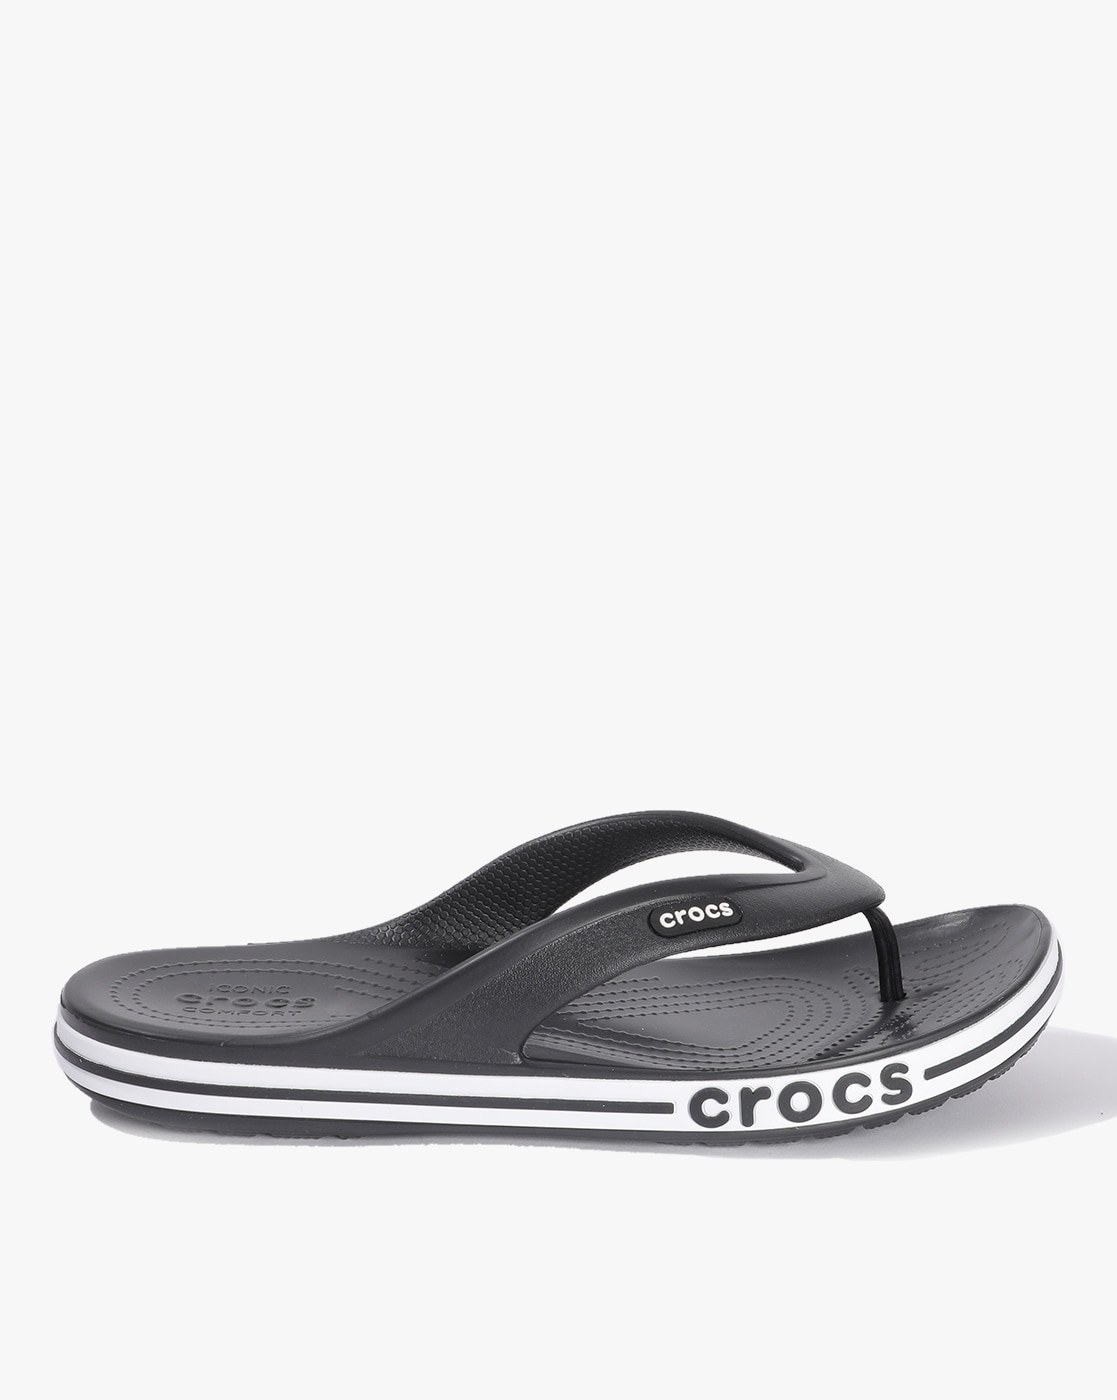 crocs flip flop slippers